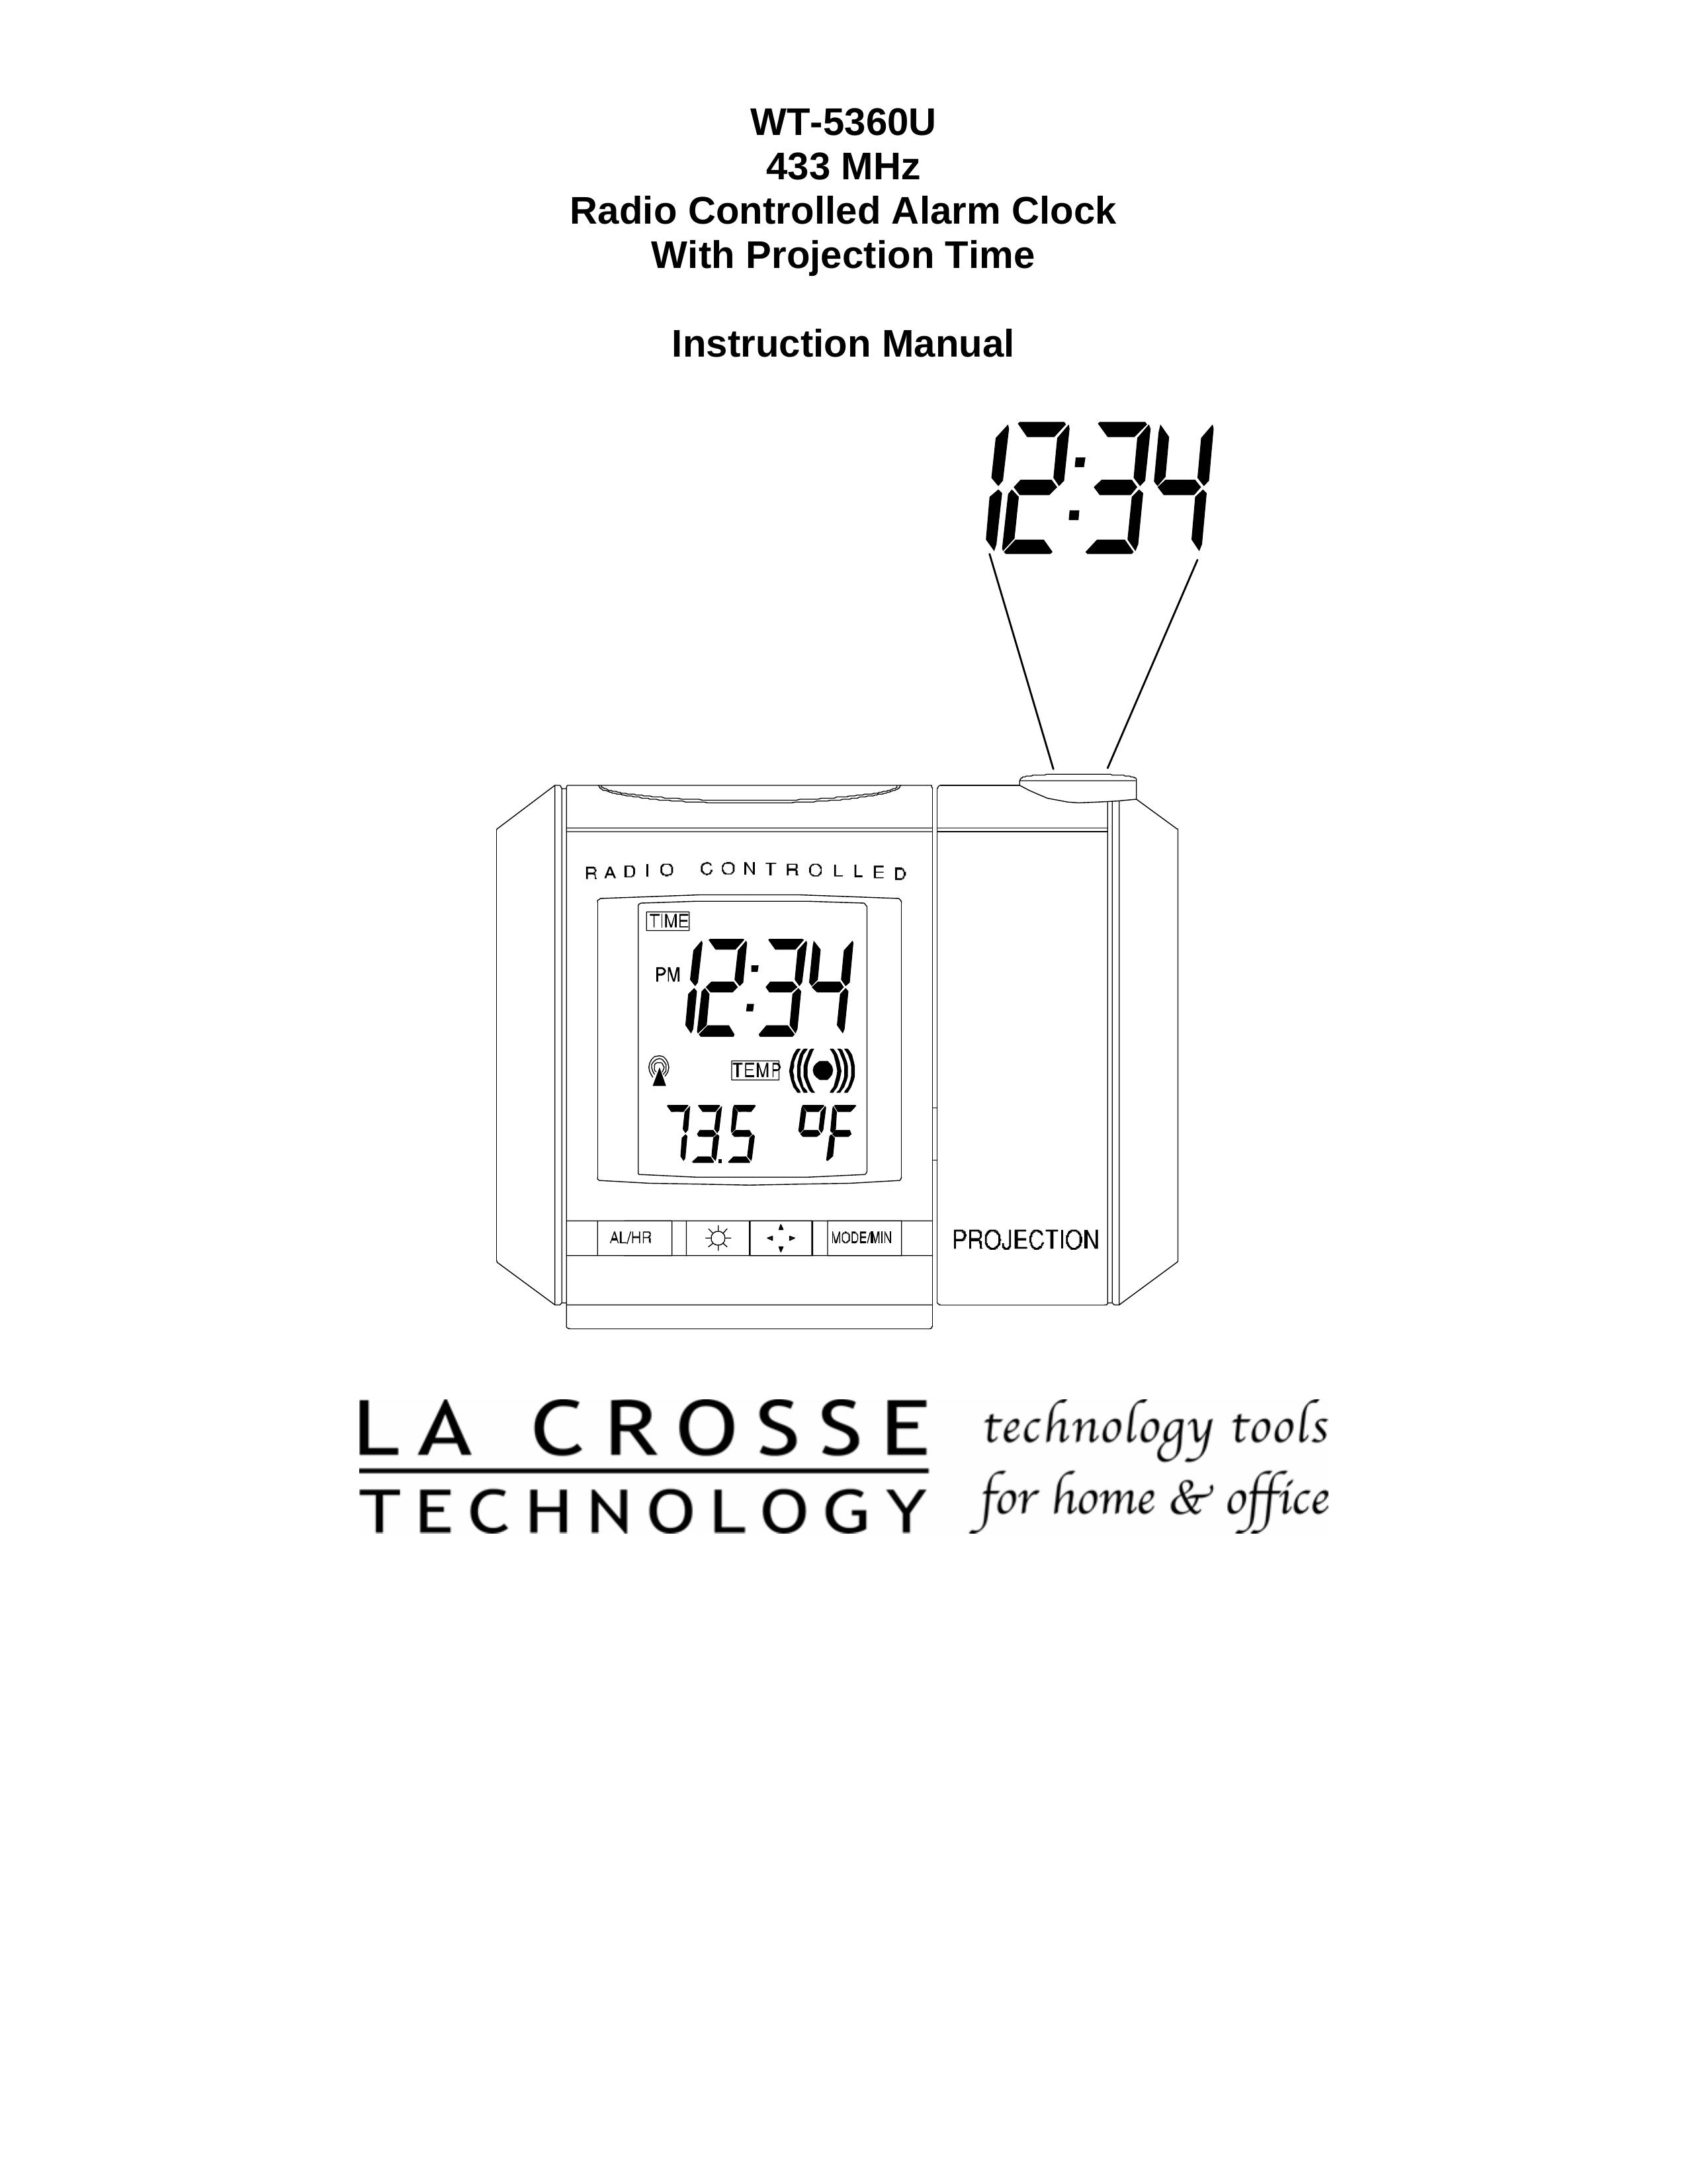 La Crosse Technology WT-5360U Clock Radio User Manual